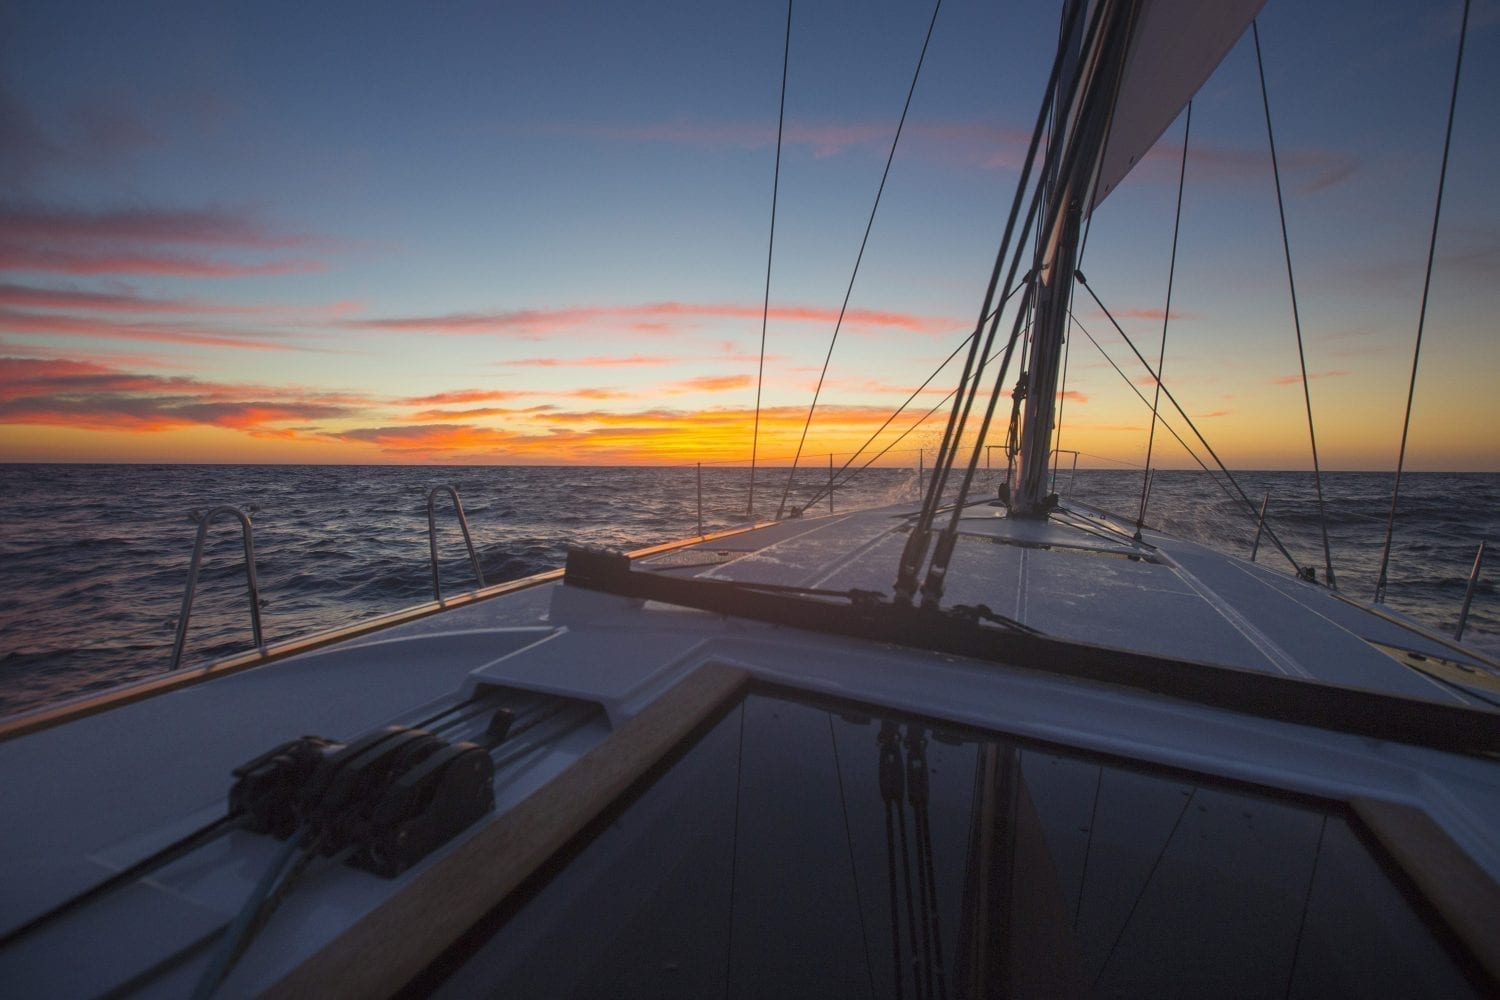 Sunrise sailing offshore from Miami to Bimini, Bahamas on the Jeanneau 509.